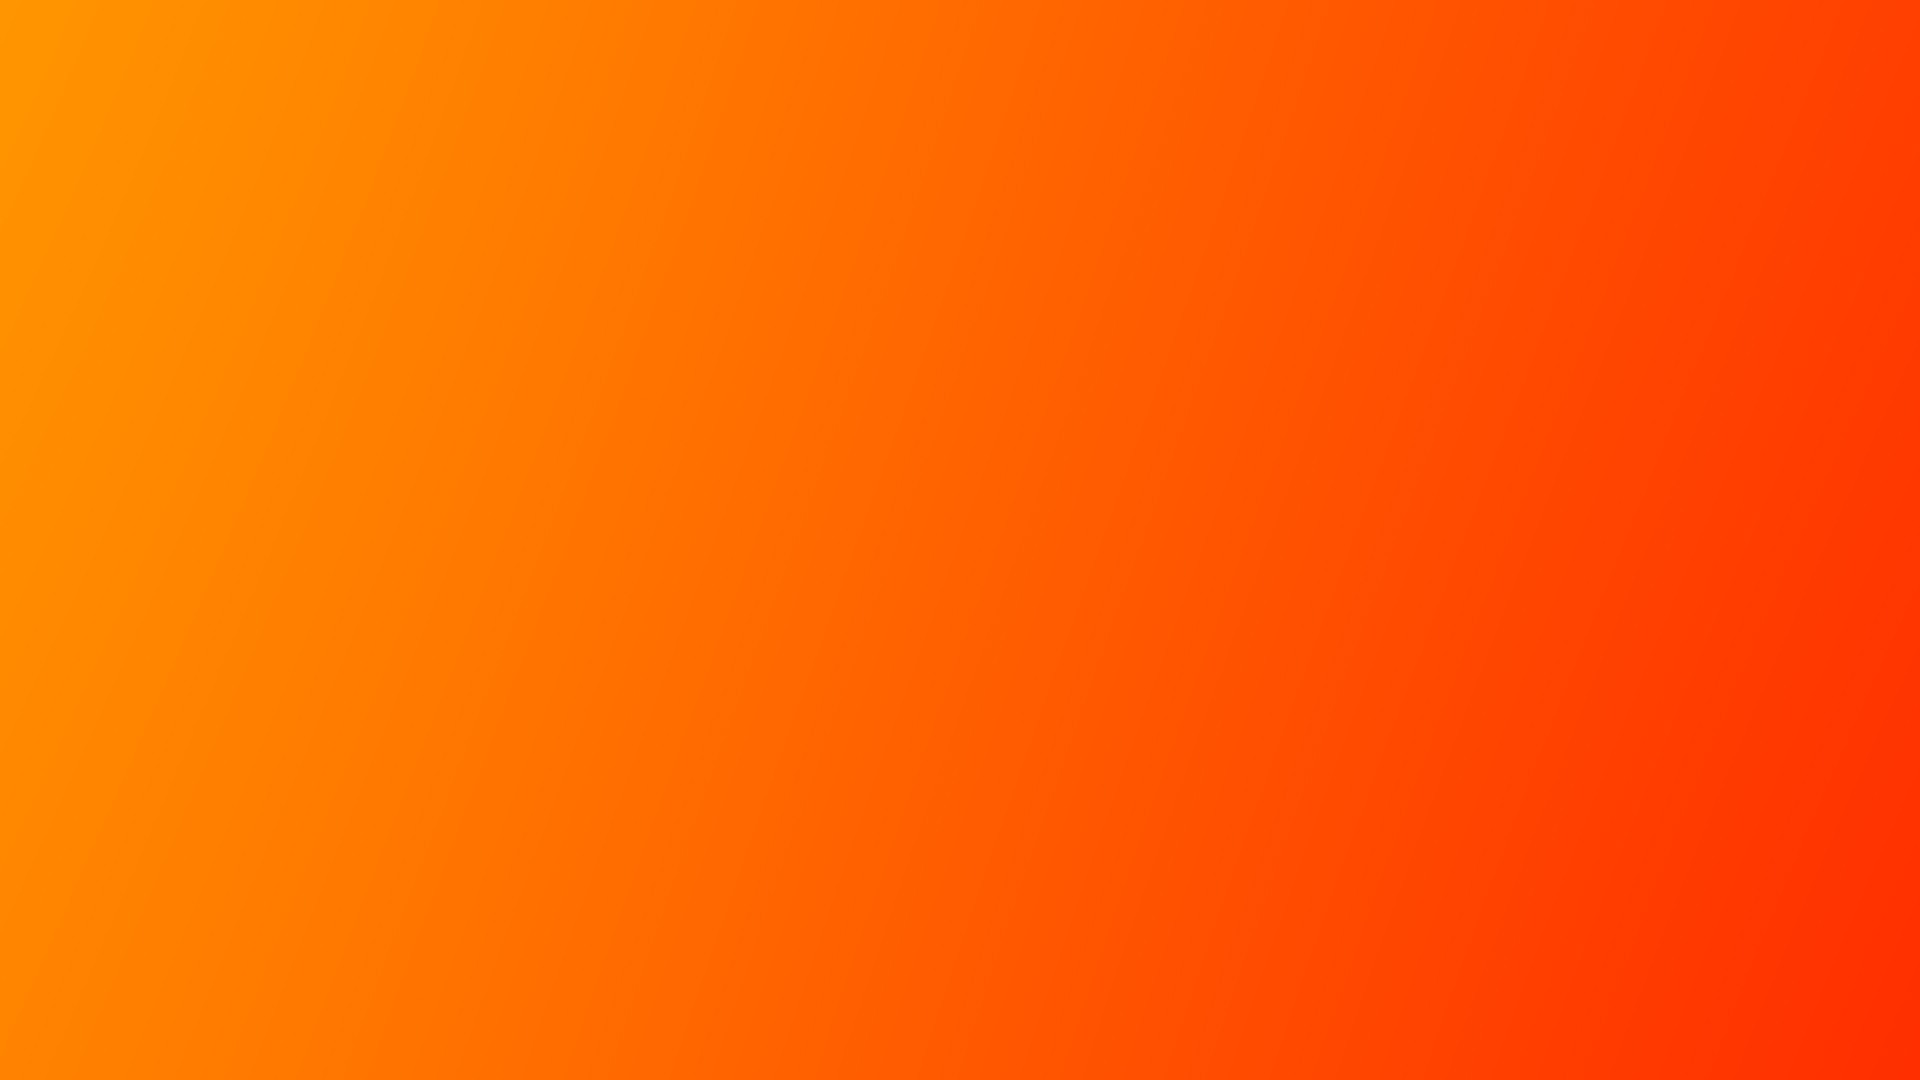 General 1920x1080 gradient orange background minimalism simple background texture